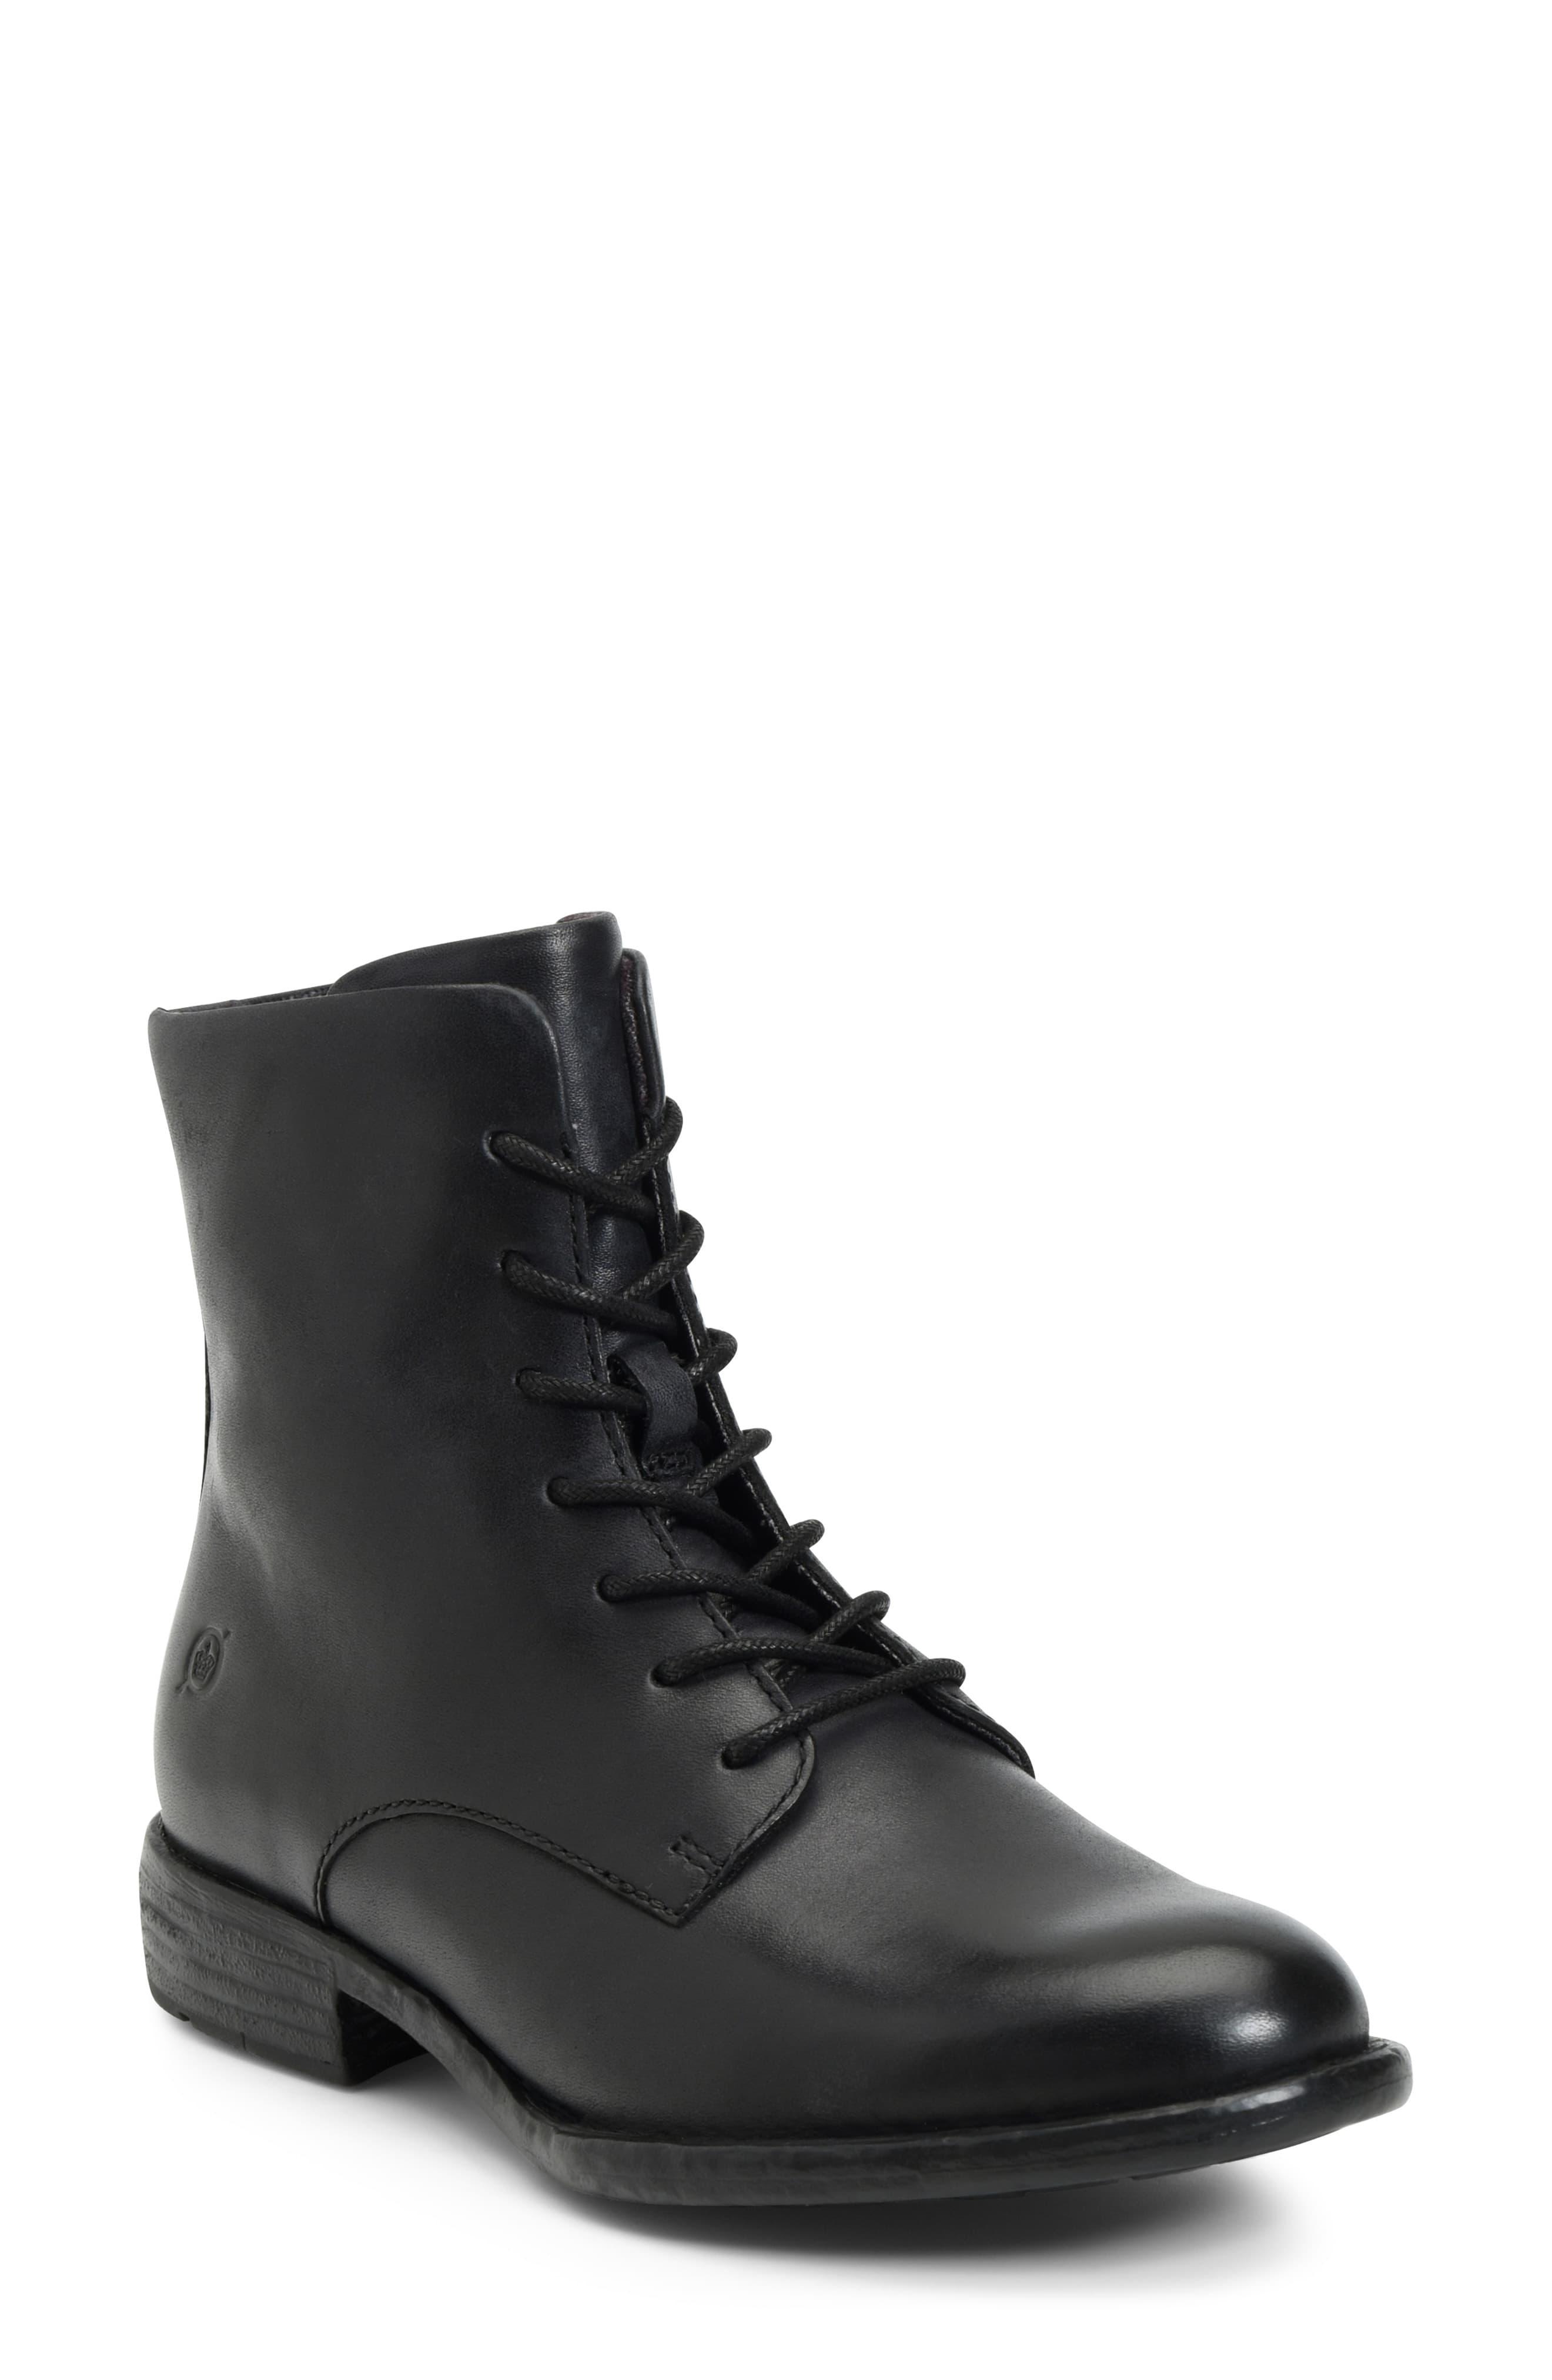 born black lace up boots